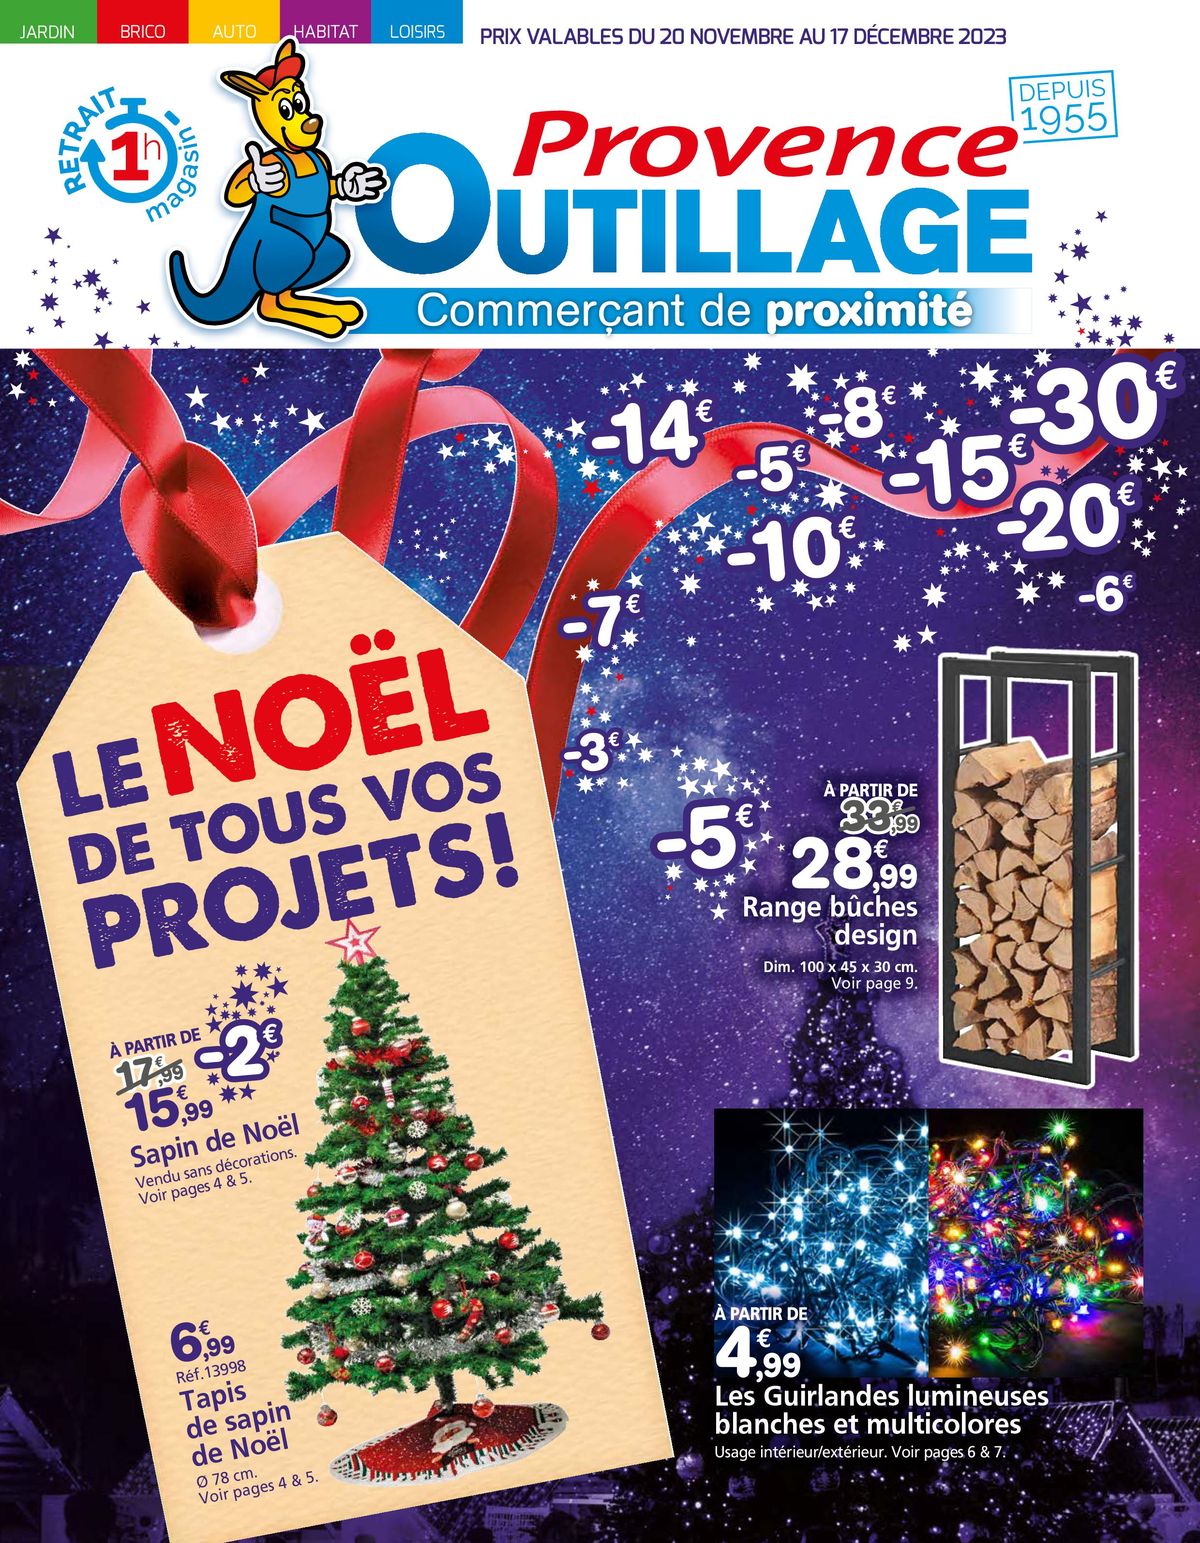 Catalogue Catalogue Provence Outillage, page 00001